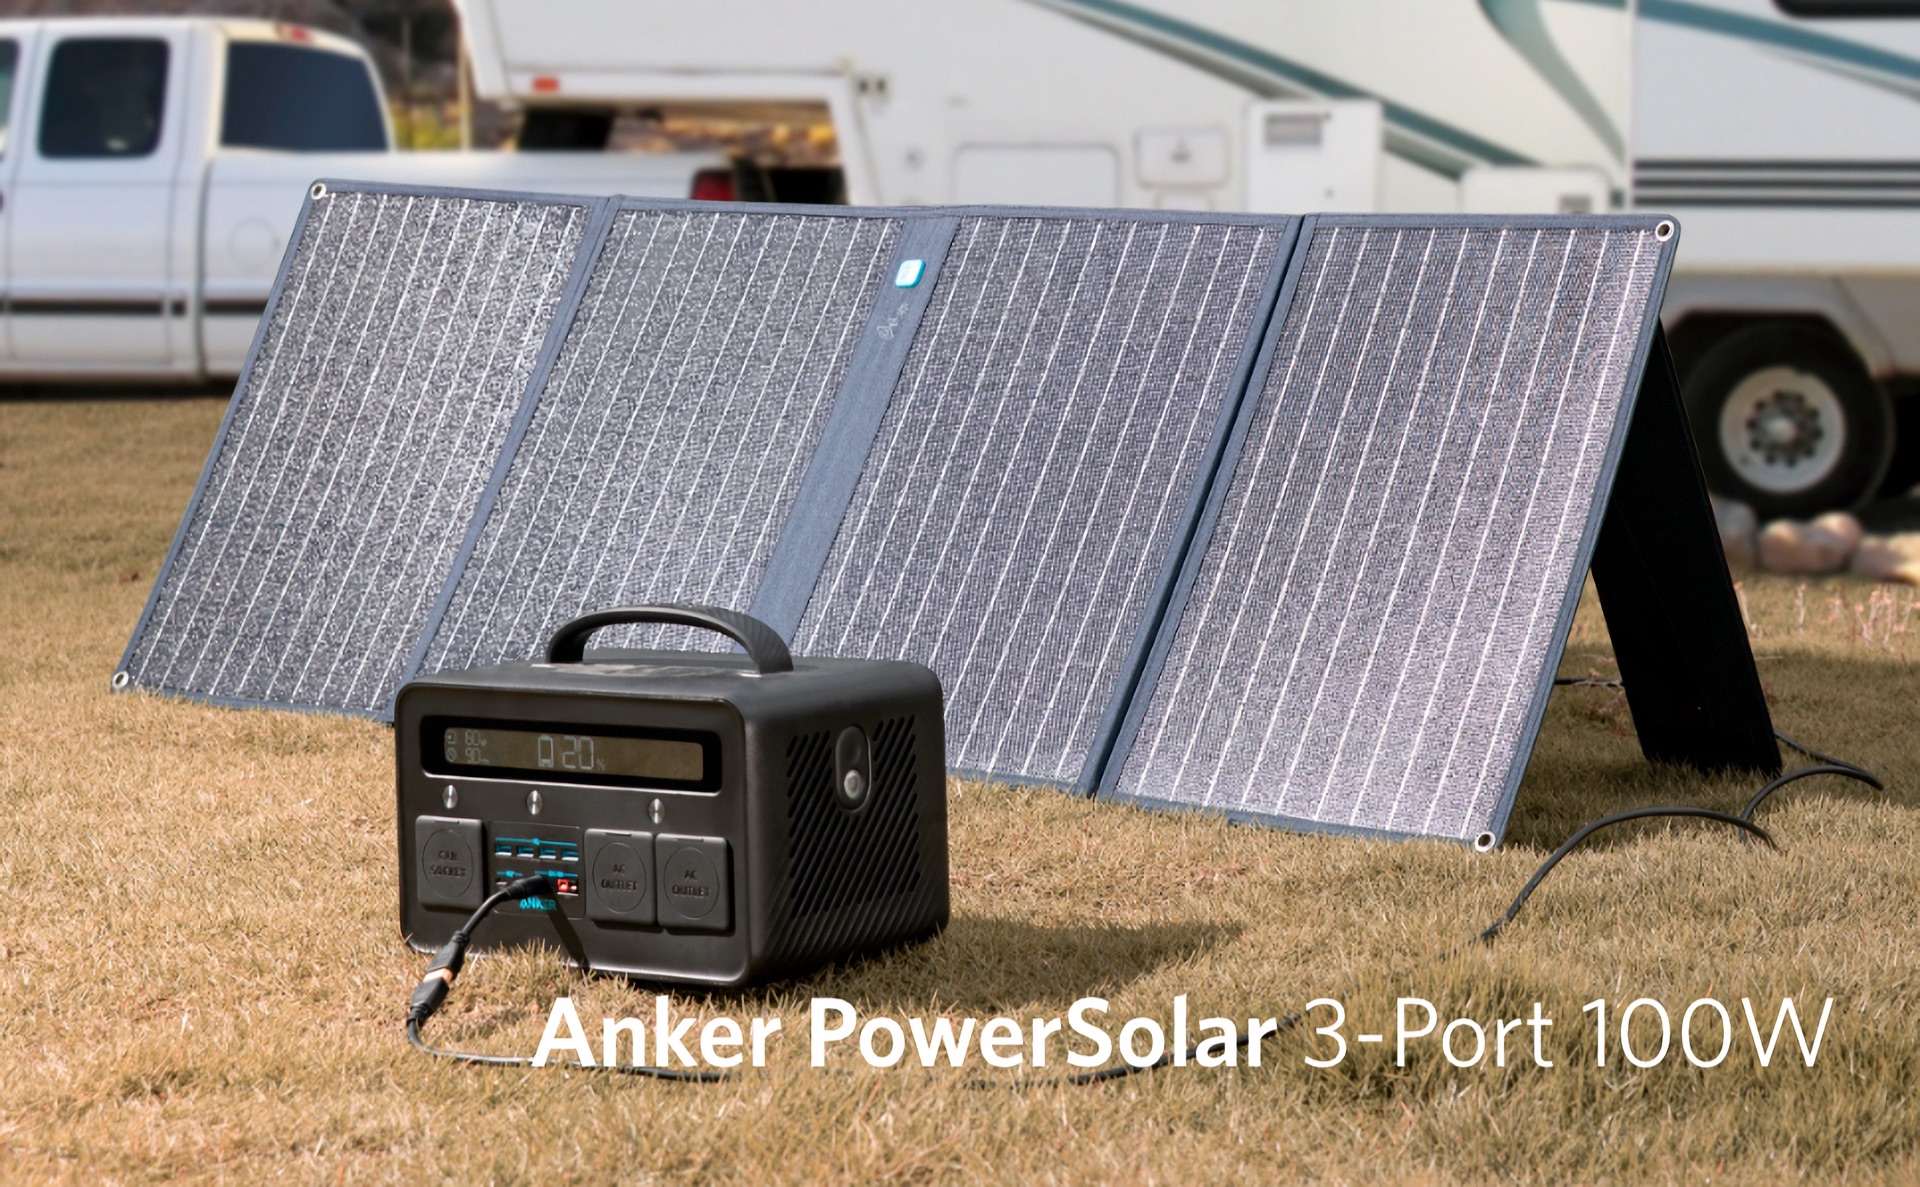 Anker PowerSolar 3-Port 100W